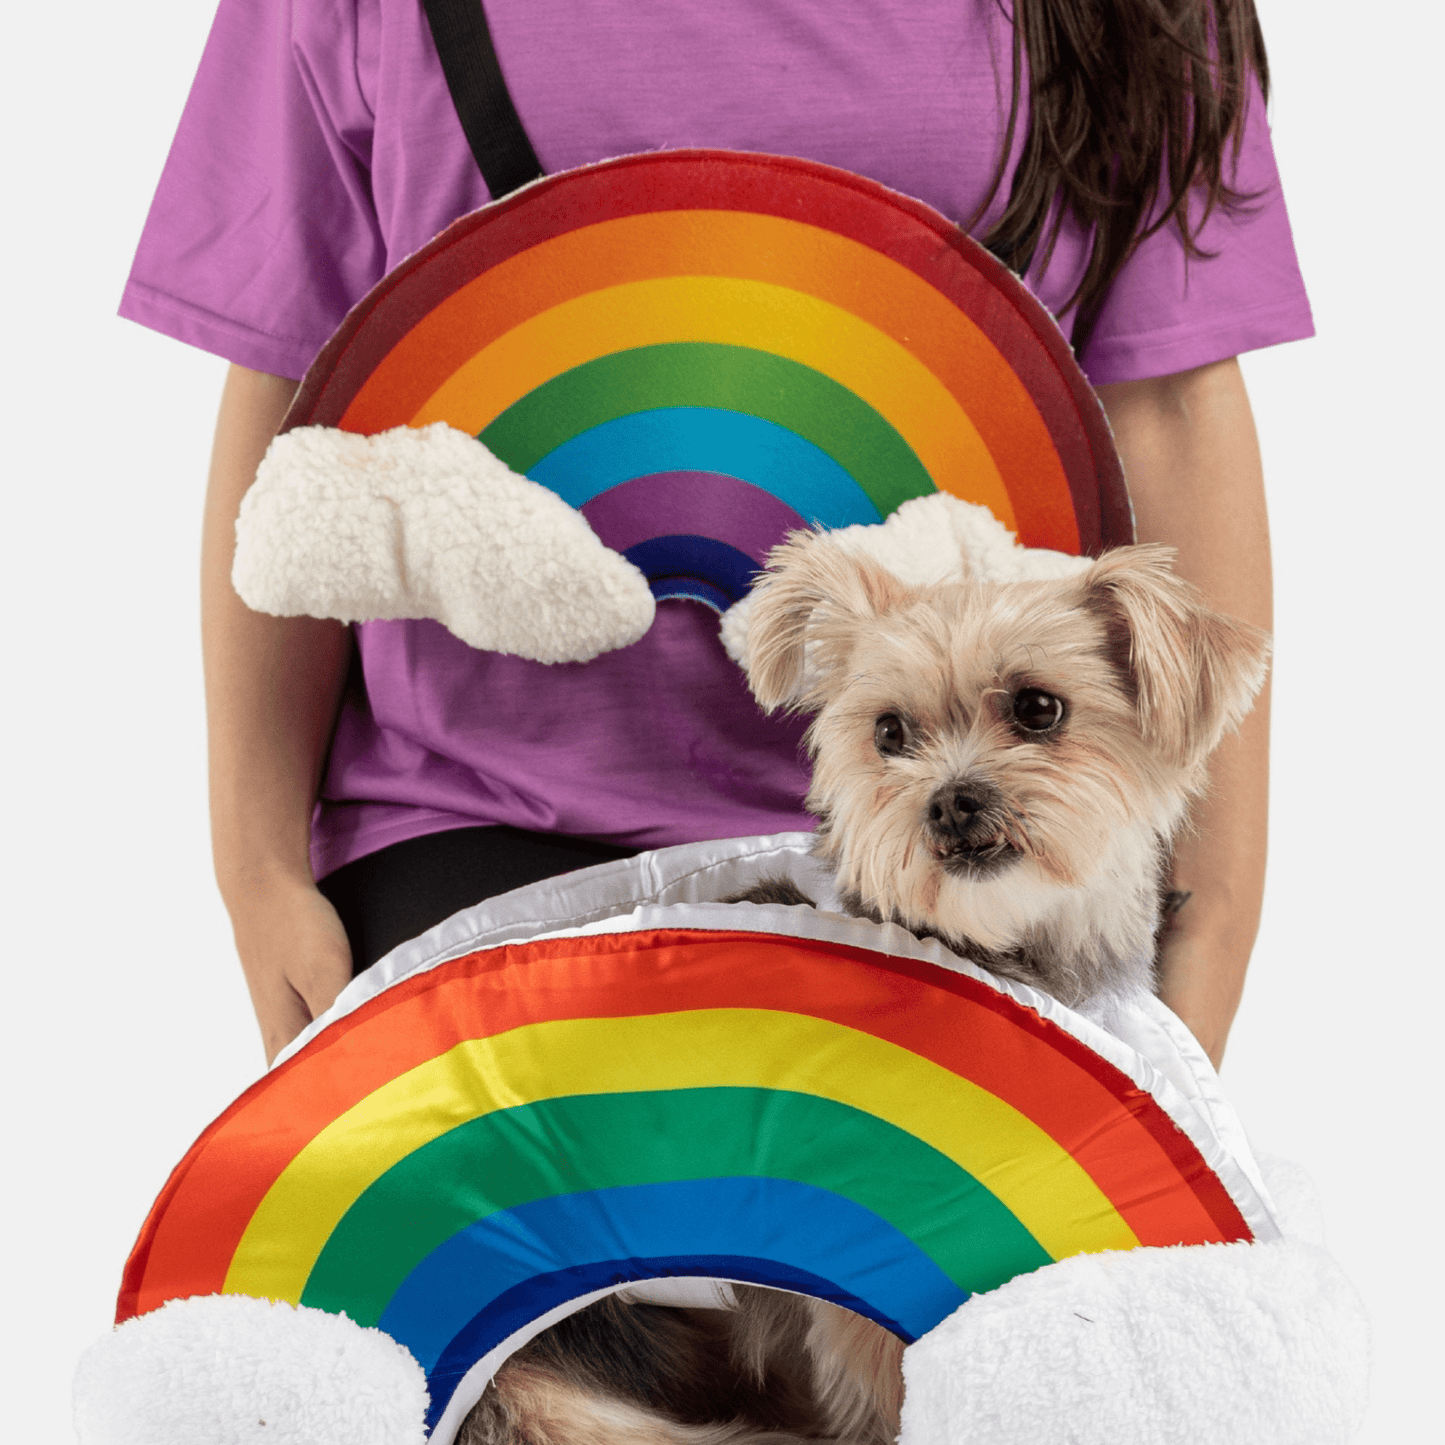 Dog and Pet Stuff Rainbow Dog Costume